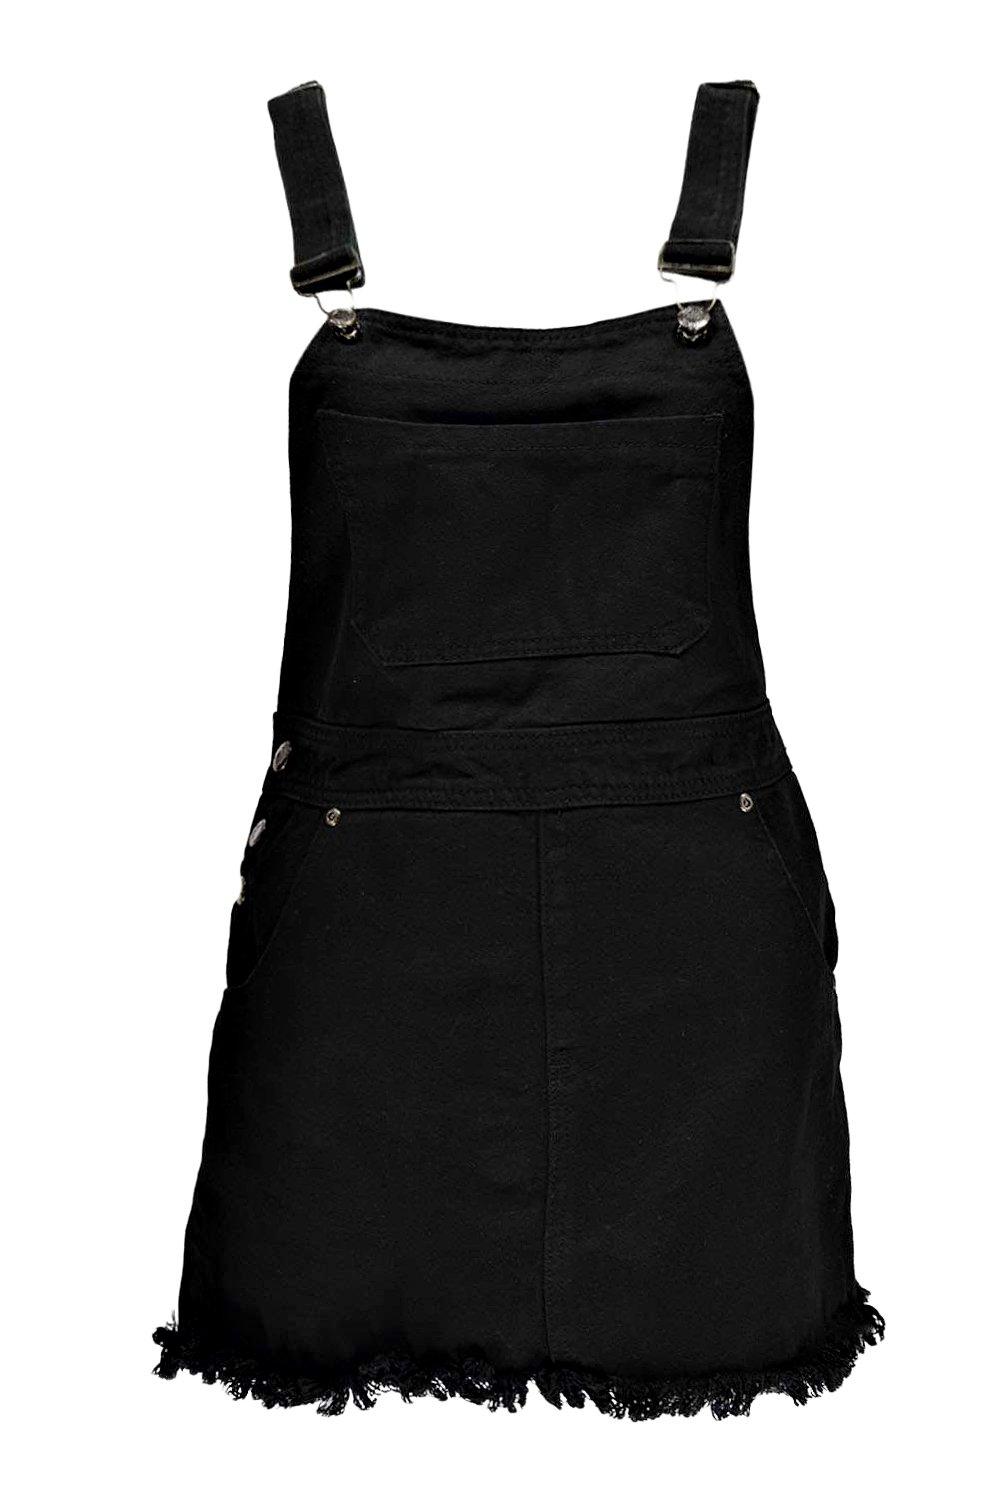 black denim overall dress plus size